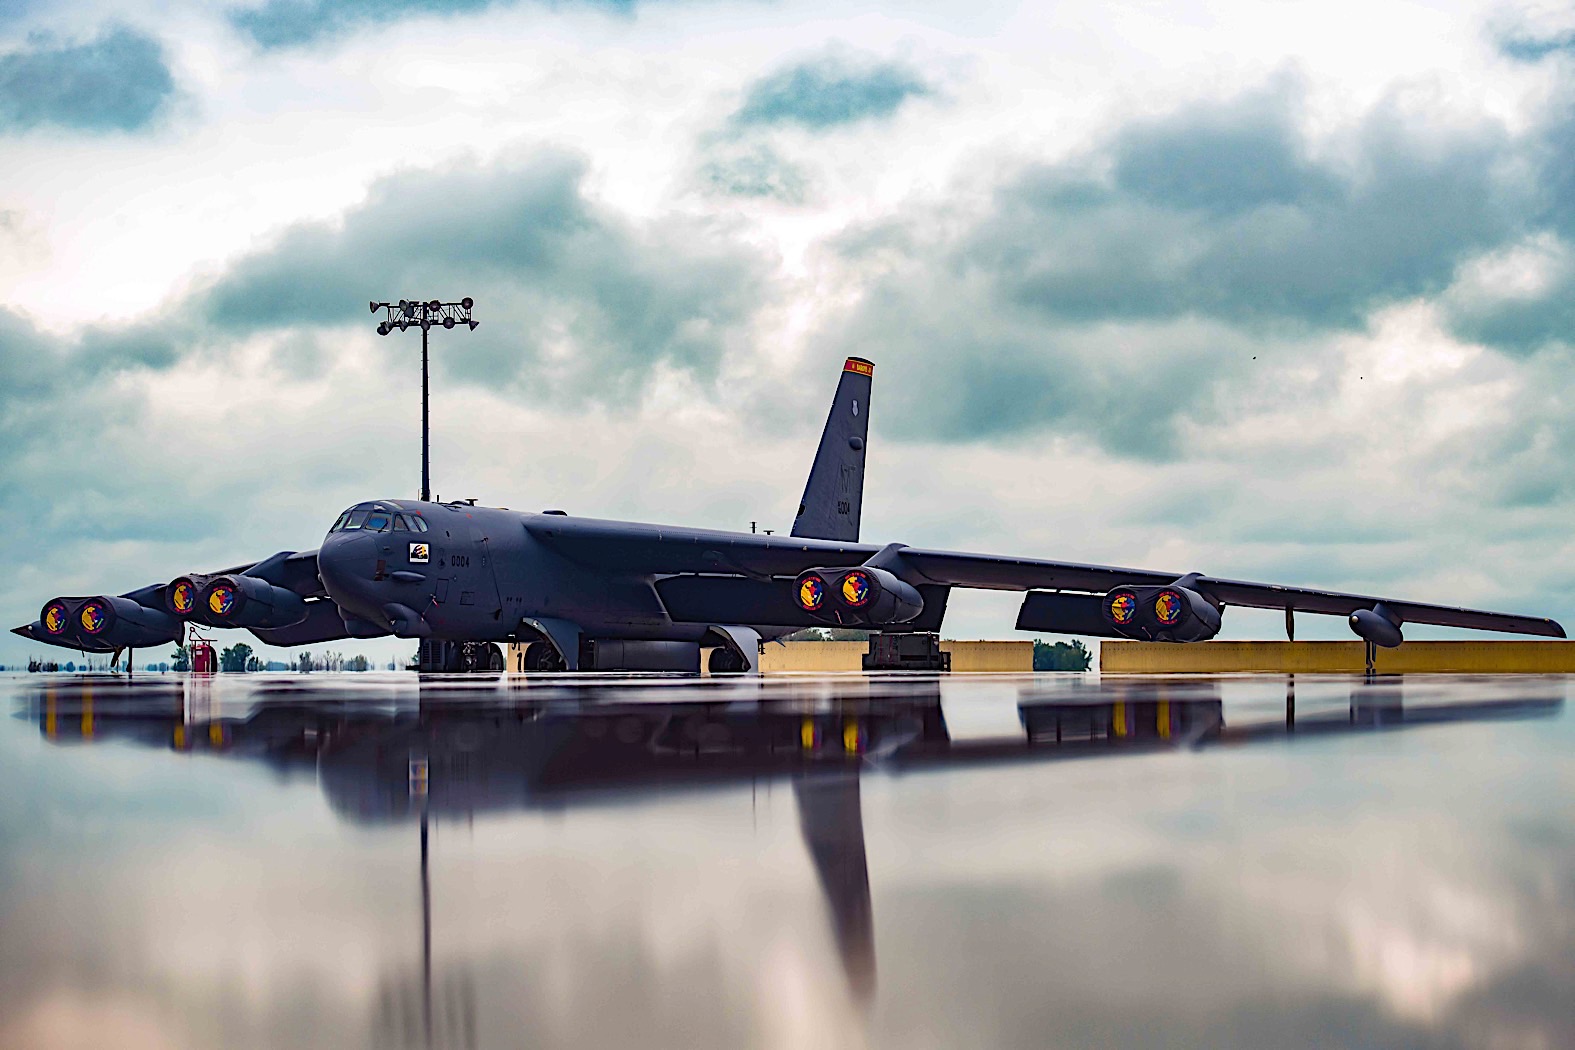 US B-52 bomber,B-52s,South Korea,US Air Force,ADEX,Aerospace,Seoul